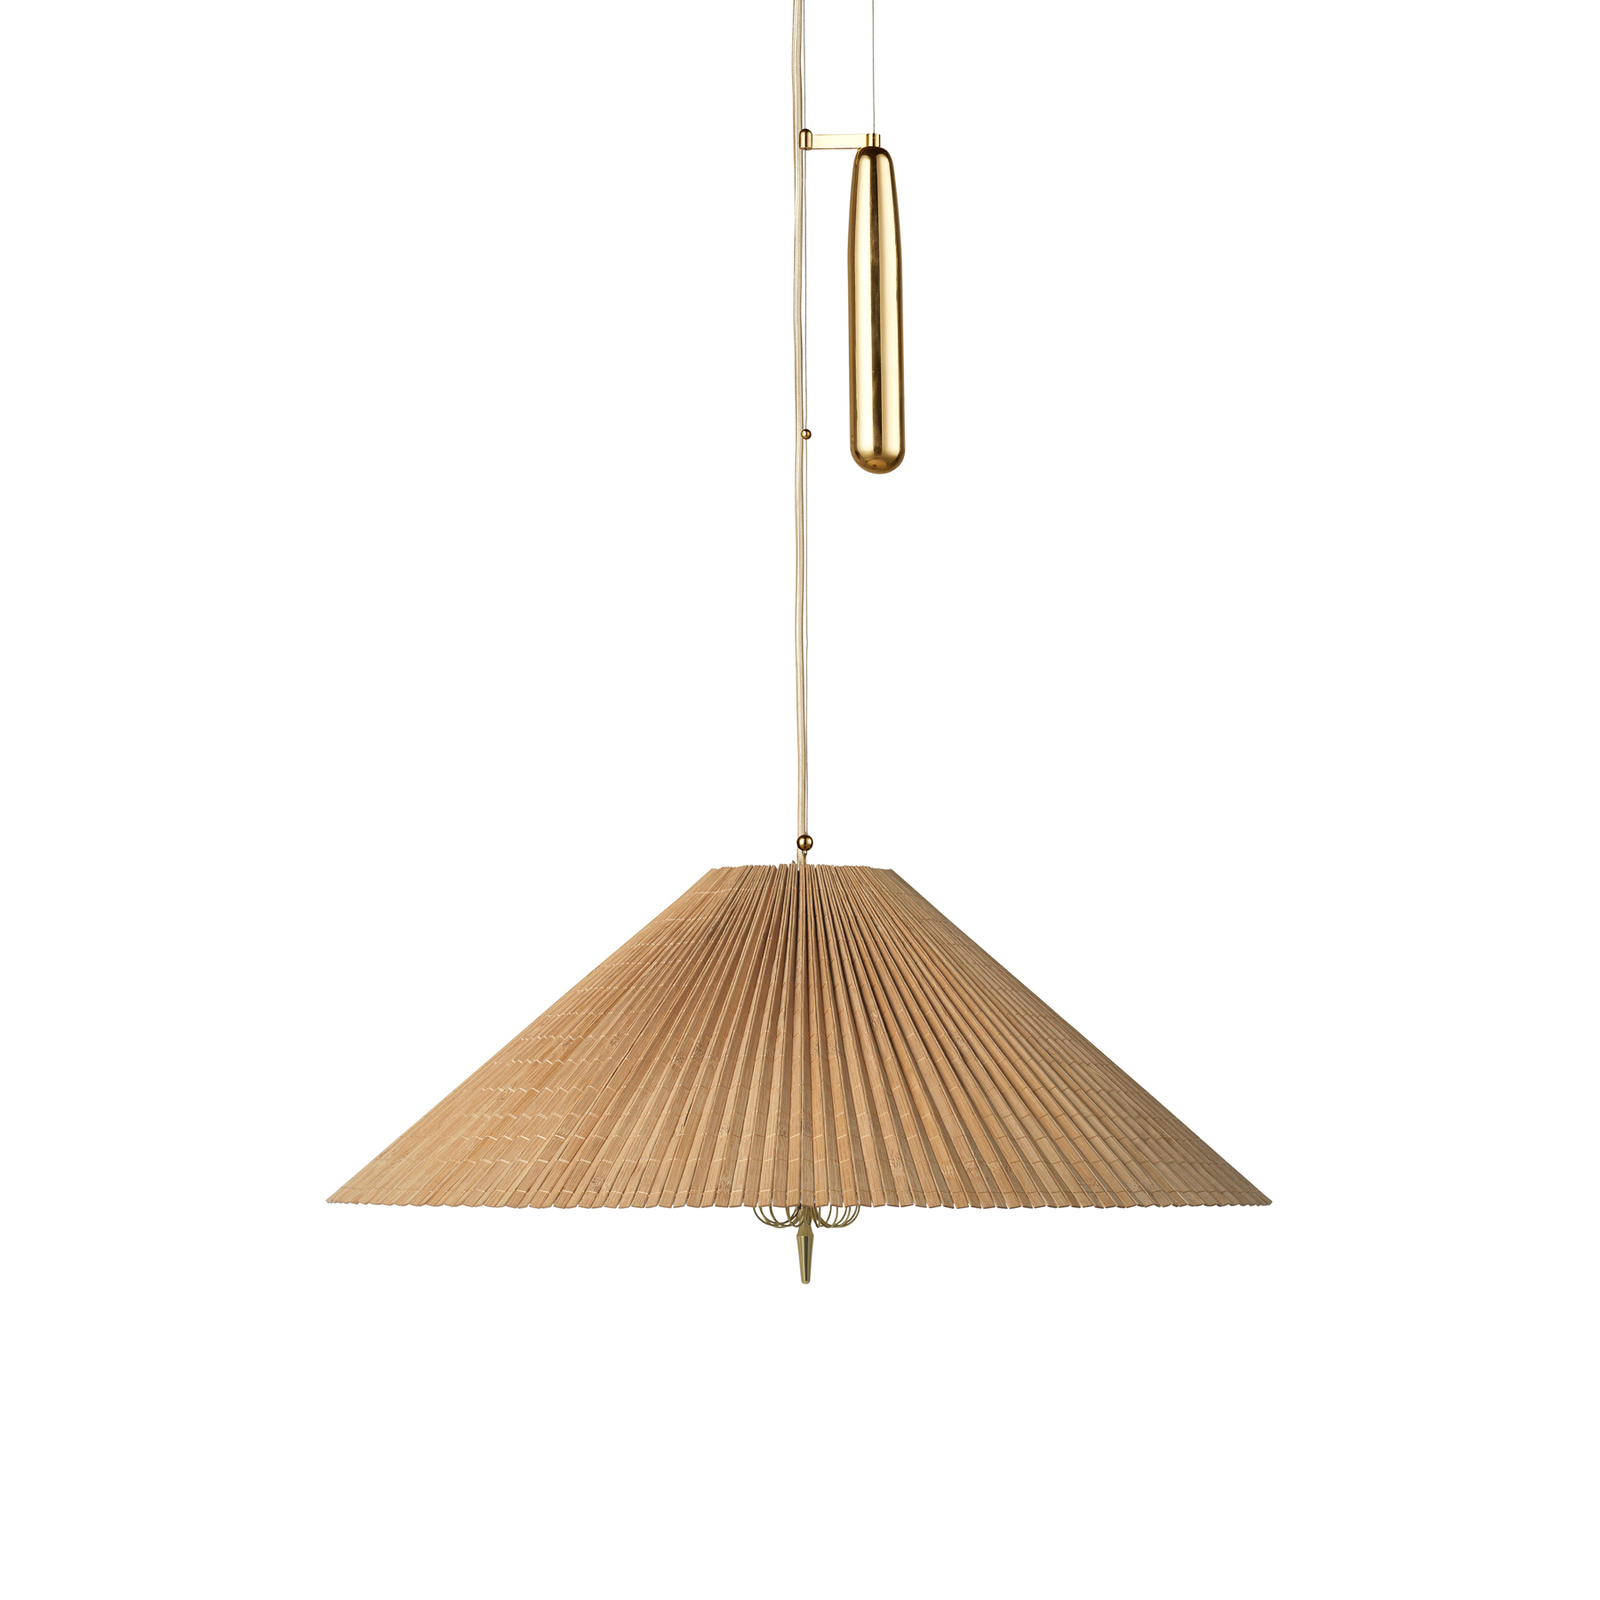 GUBI pendant light A1972, brass, bamboo lampshade, adjustable